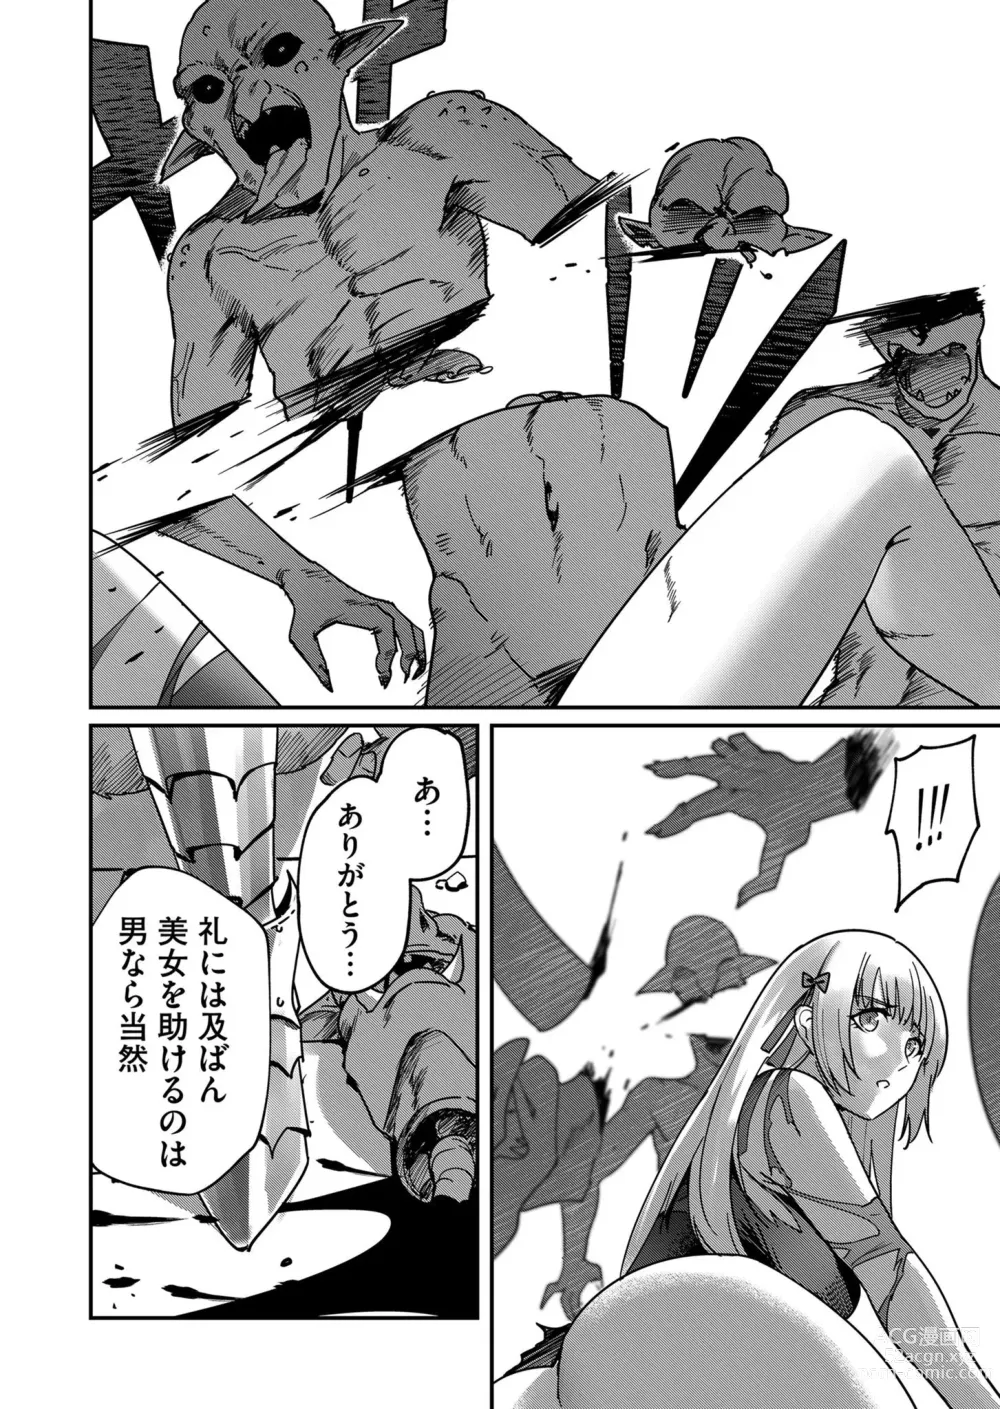 Page 6 of manga Kichiku Eiyuu Vol.01